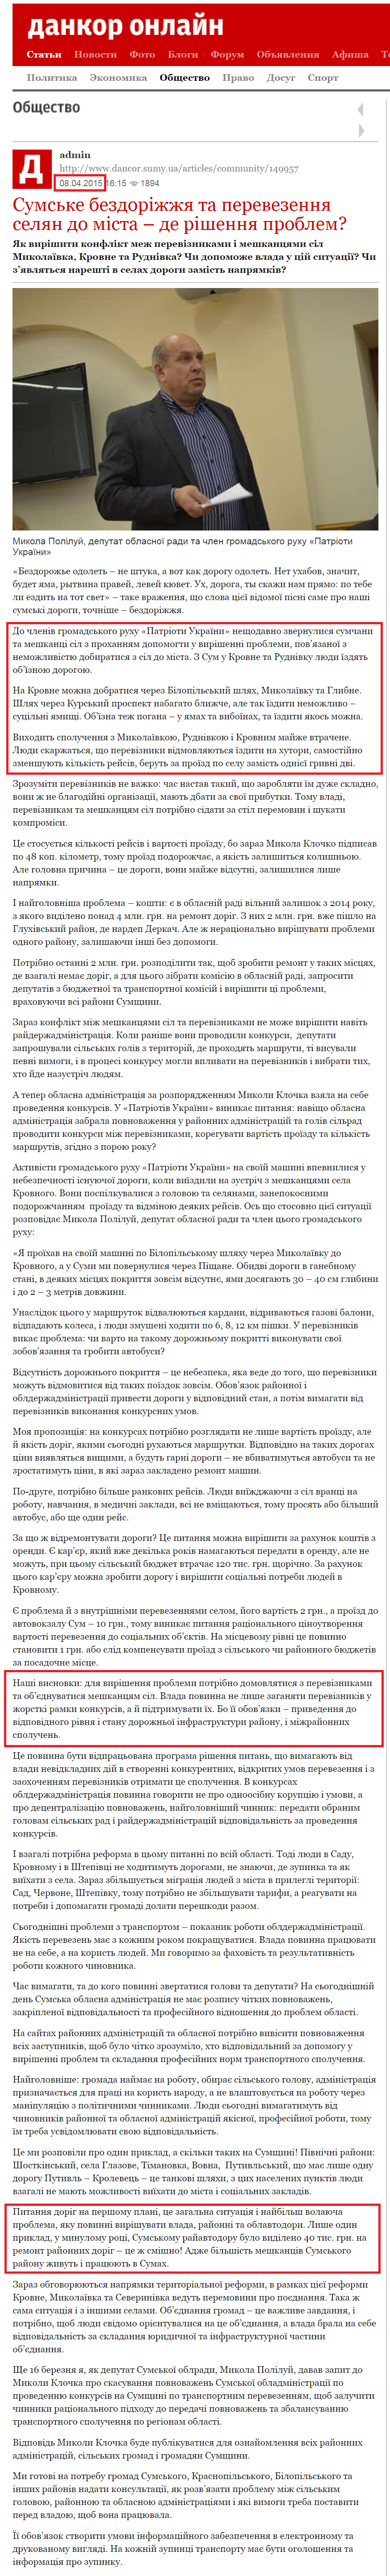 http://www.dancor.sumy.ua/articles/community/149957